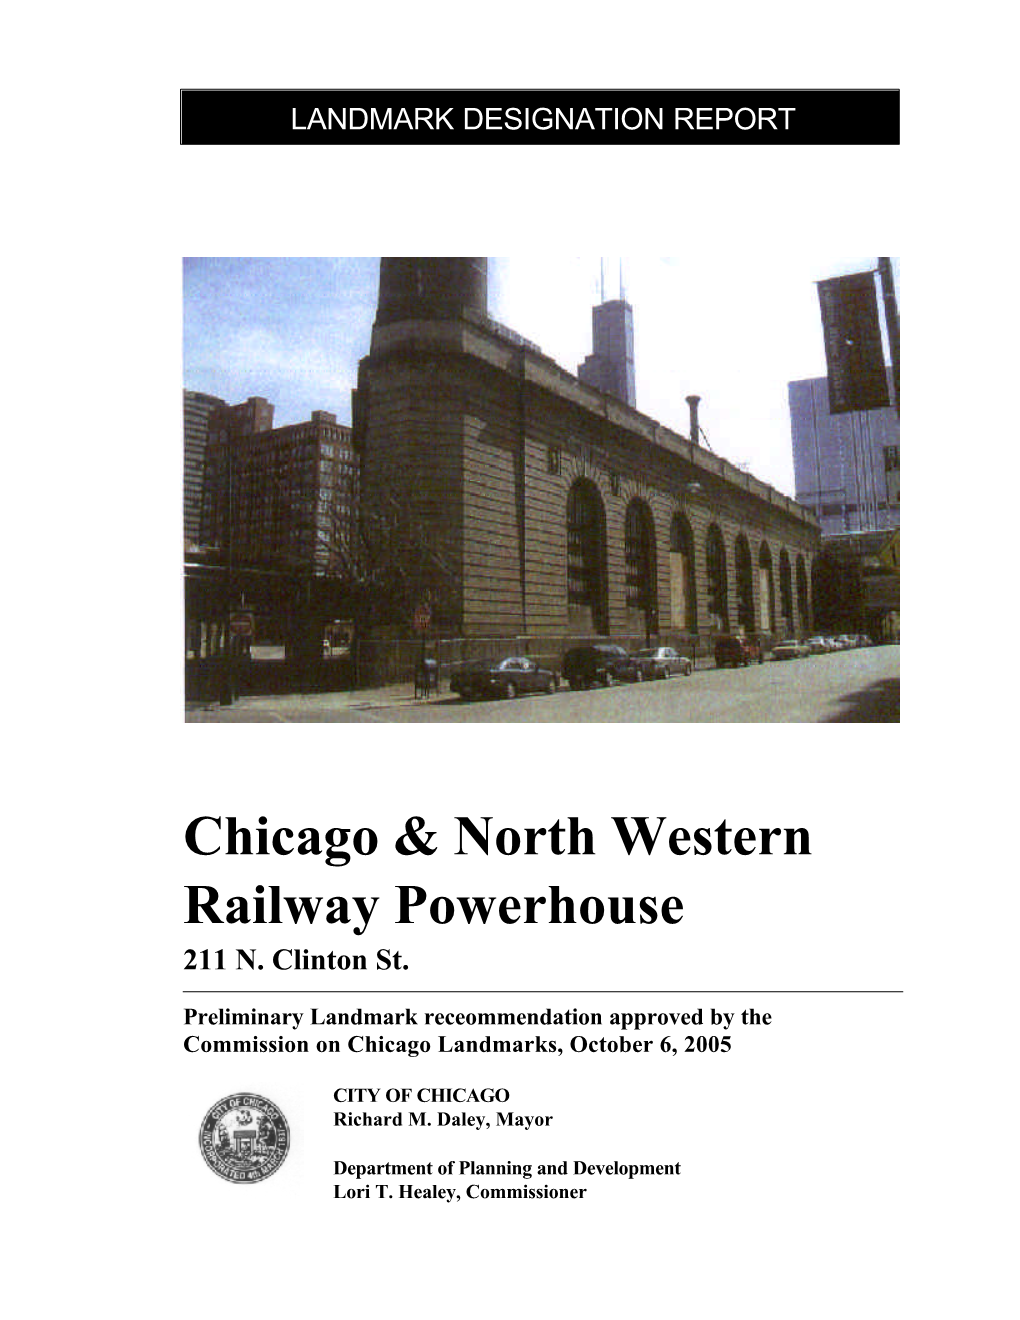 Chicago & North Western Railway Powerhouse